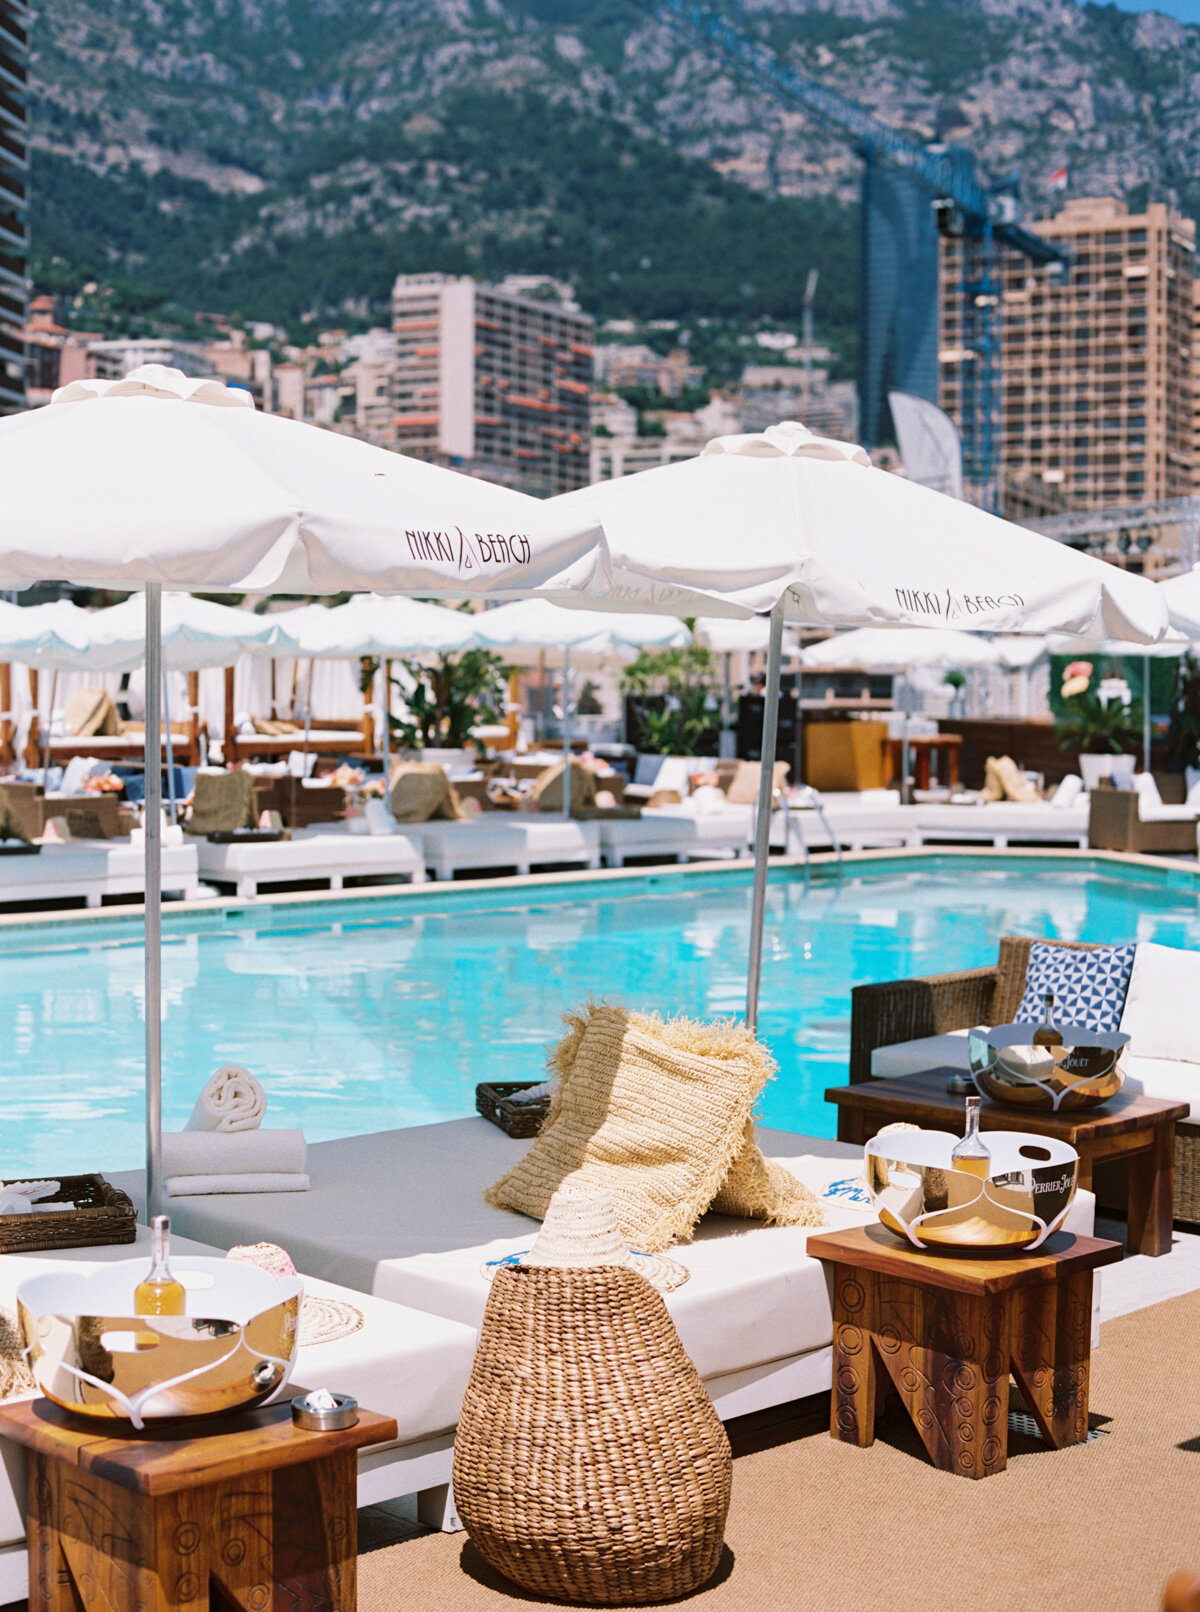 Nikki-Beach-Club-Pool-Monaco-Nice-Saint Tropez-Welcome-Dinner-Katie-Grant-destination-wedding (2 of 22).jpg